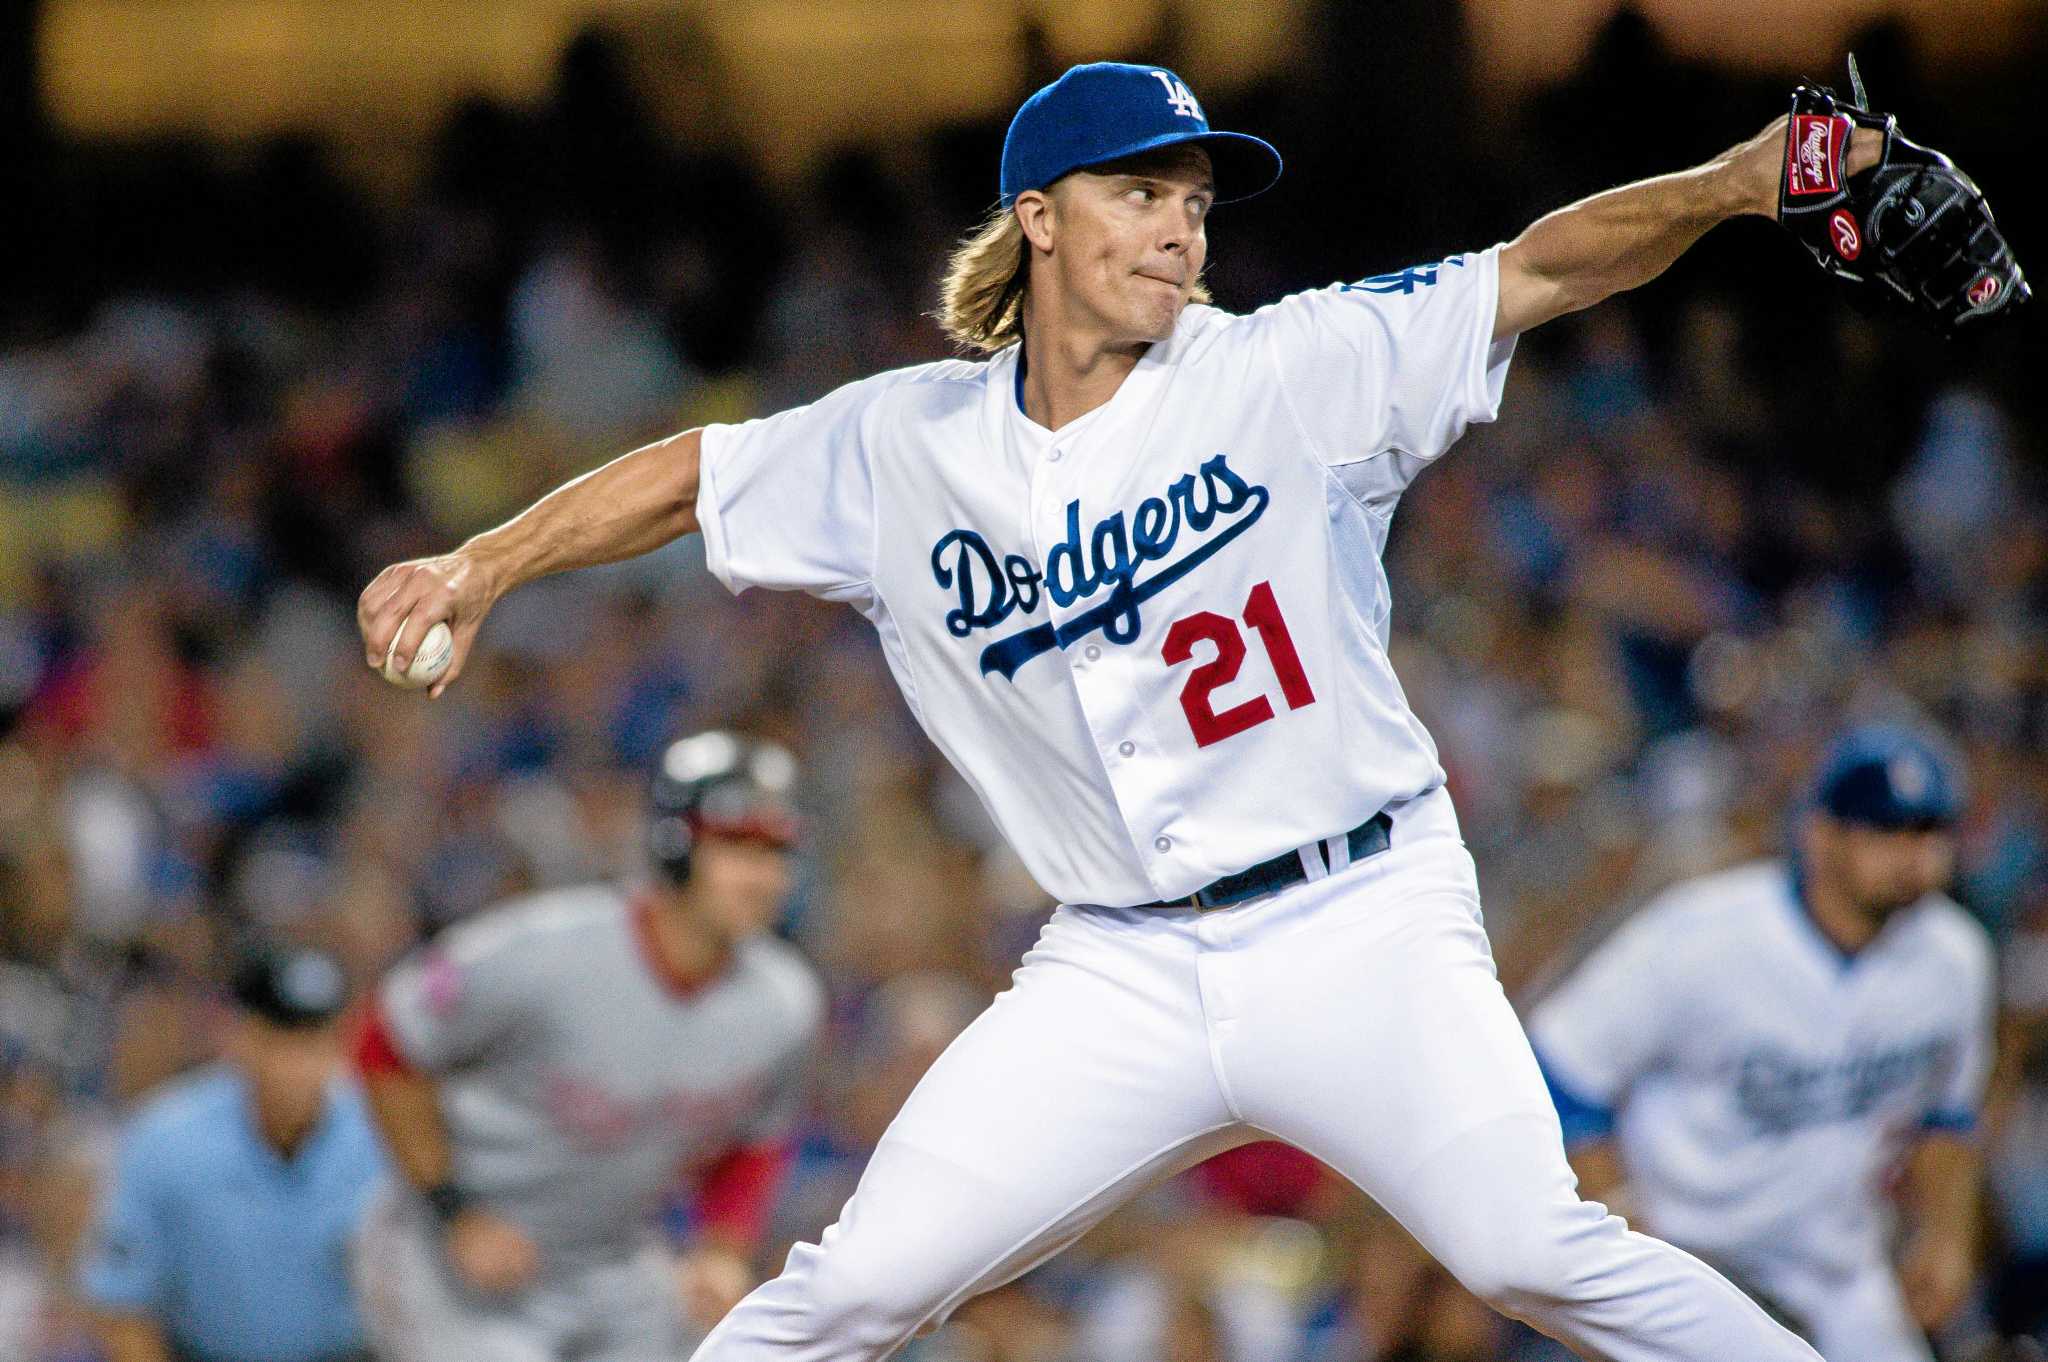 Dodgers' Zack Greinke gives up $71 million, becomes free agent